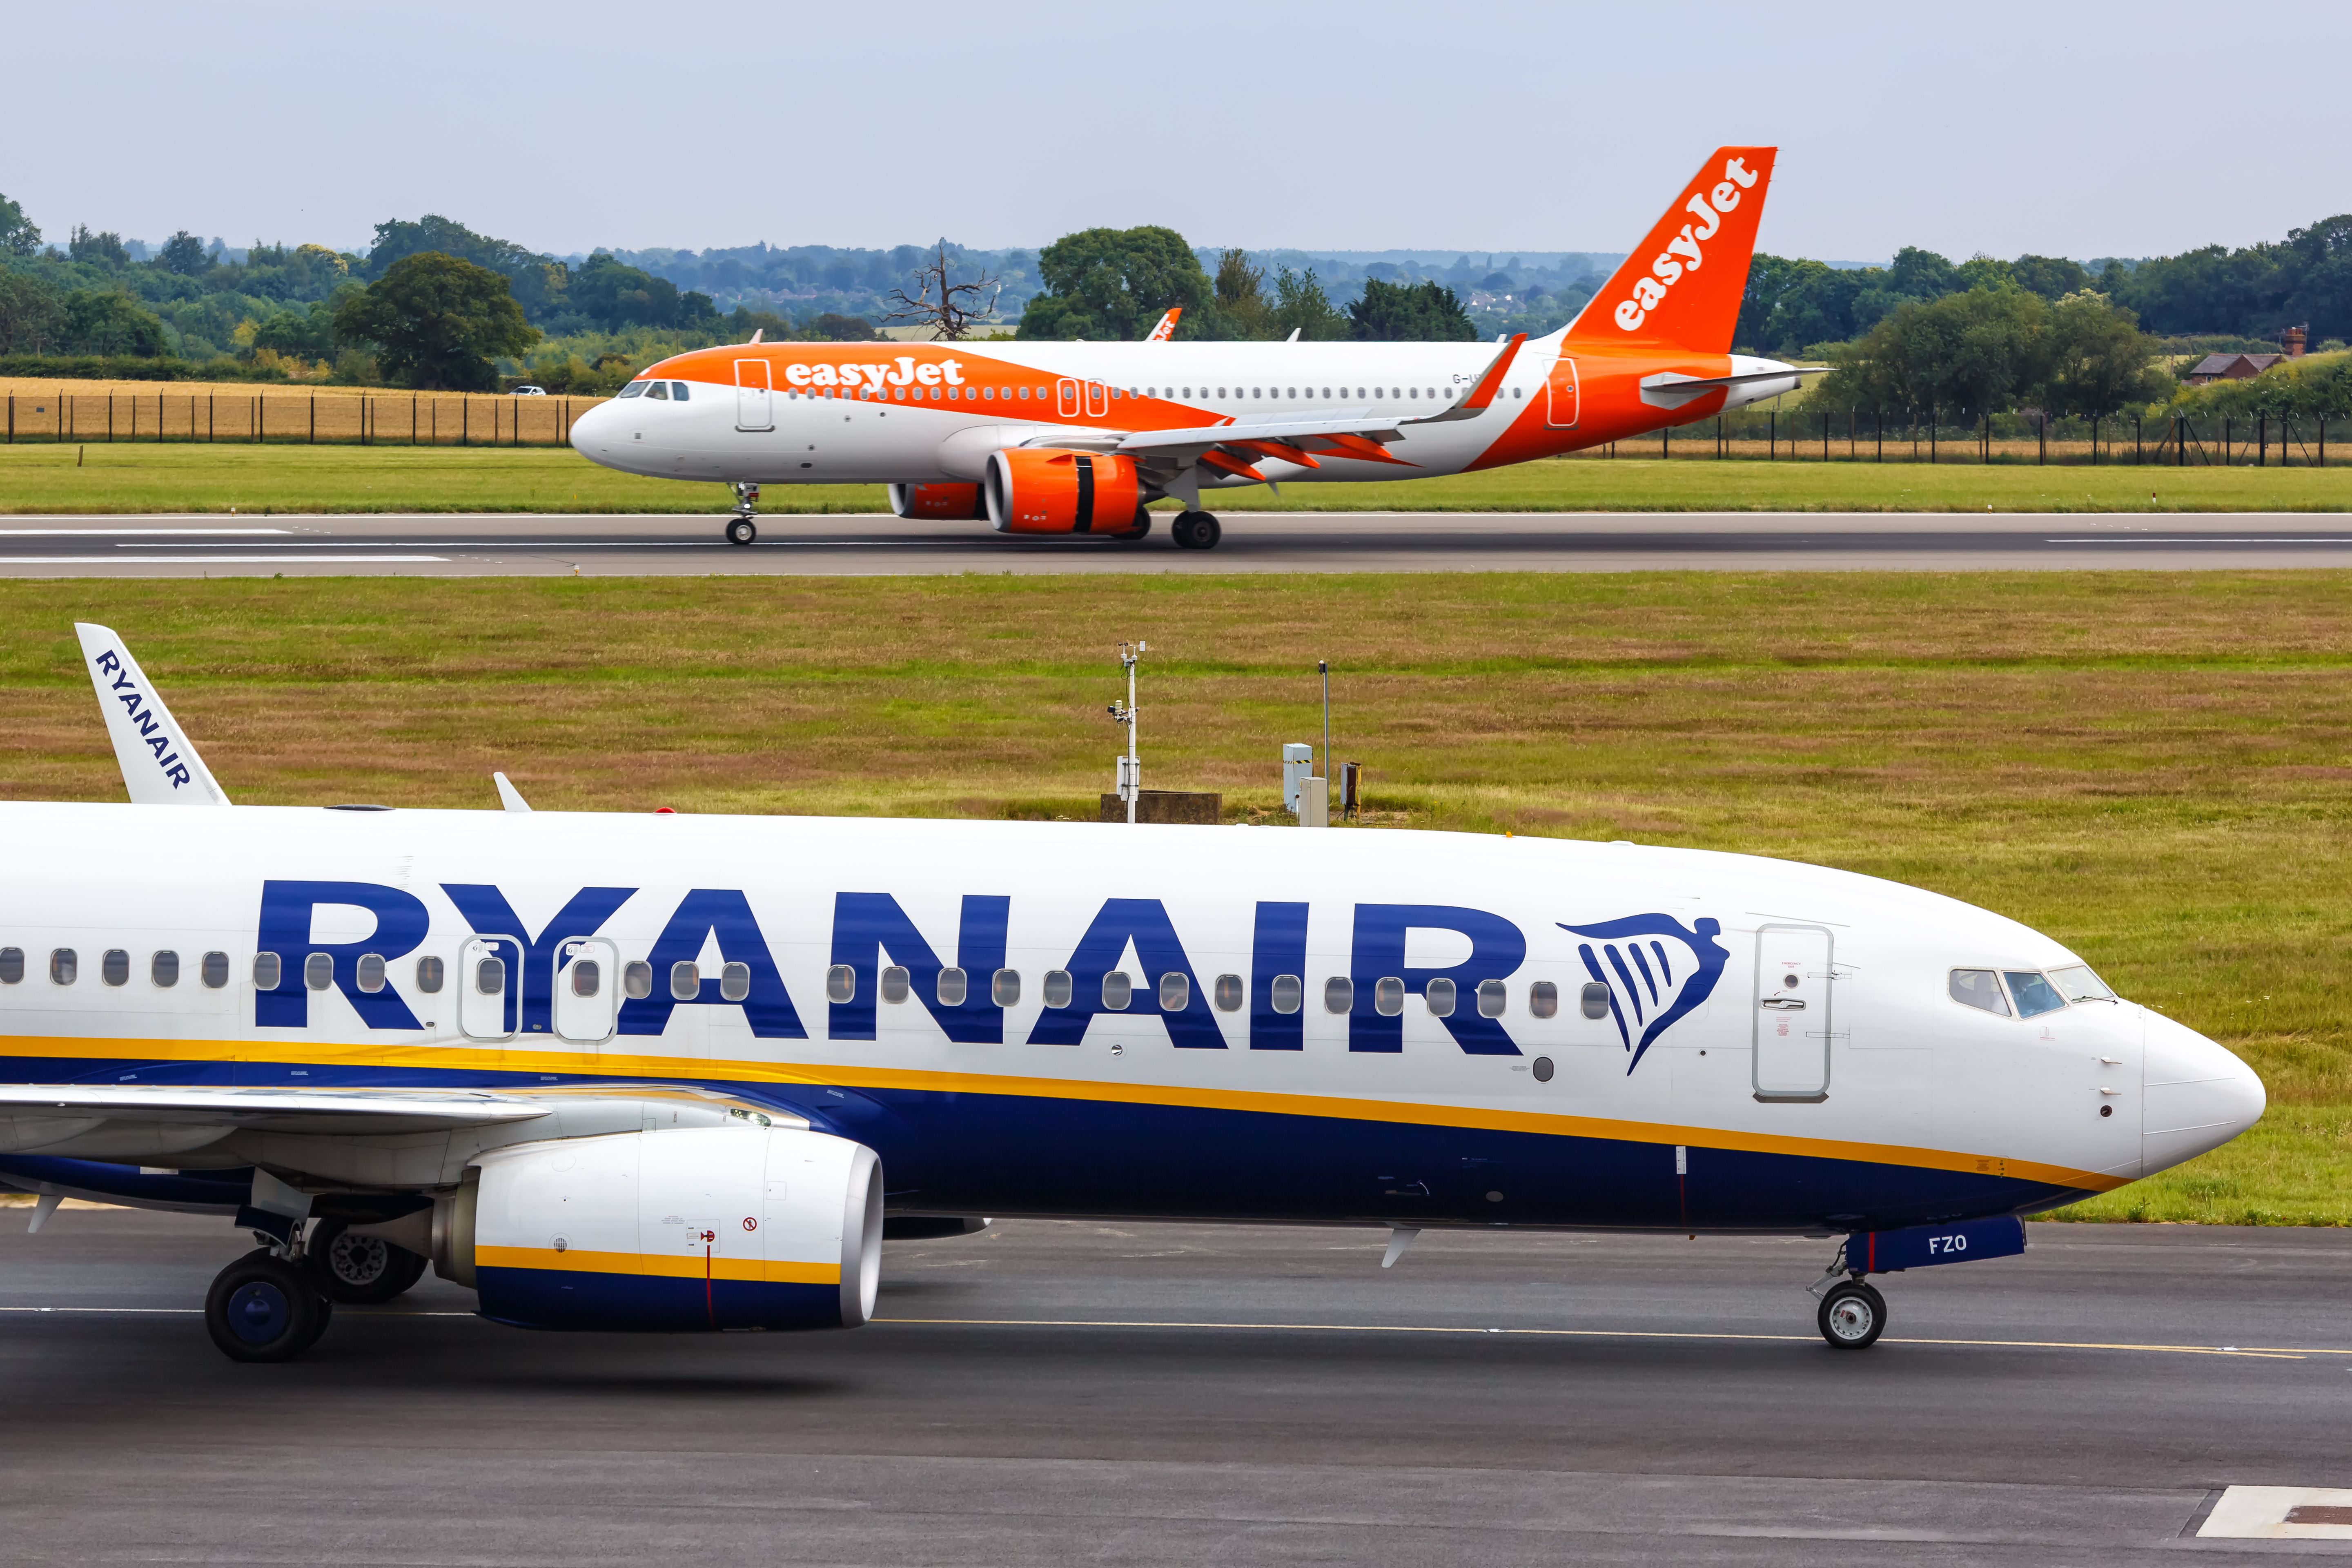 Ryanair and easyJet aircraft taxiing at London Luton Airport.